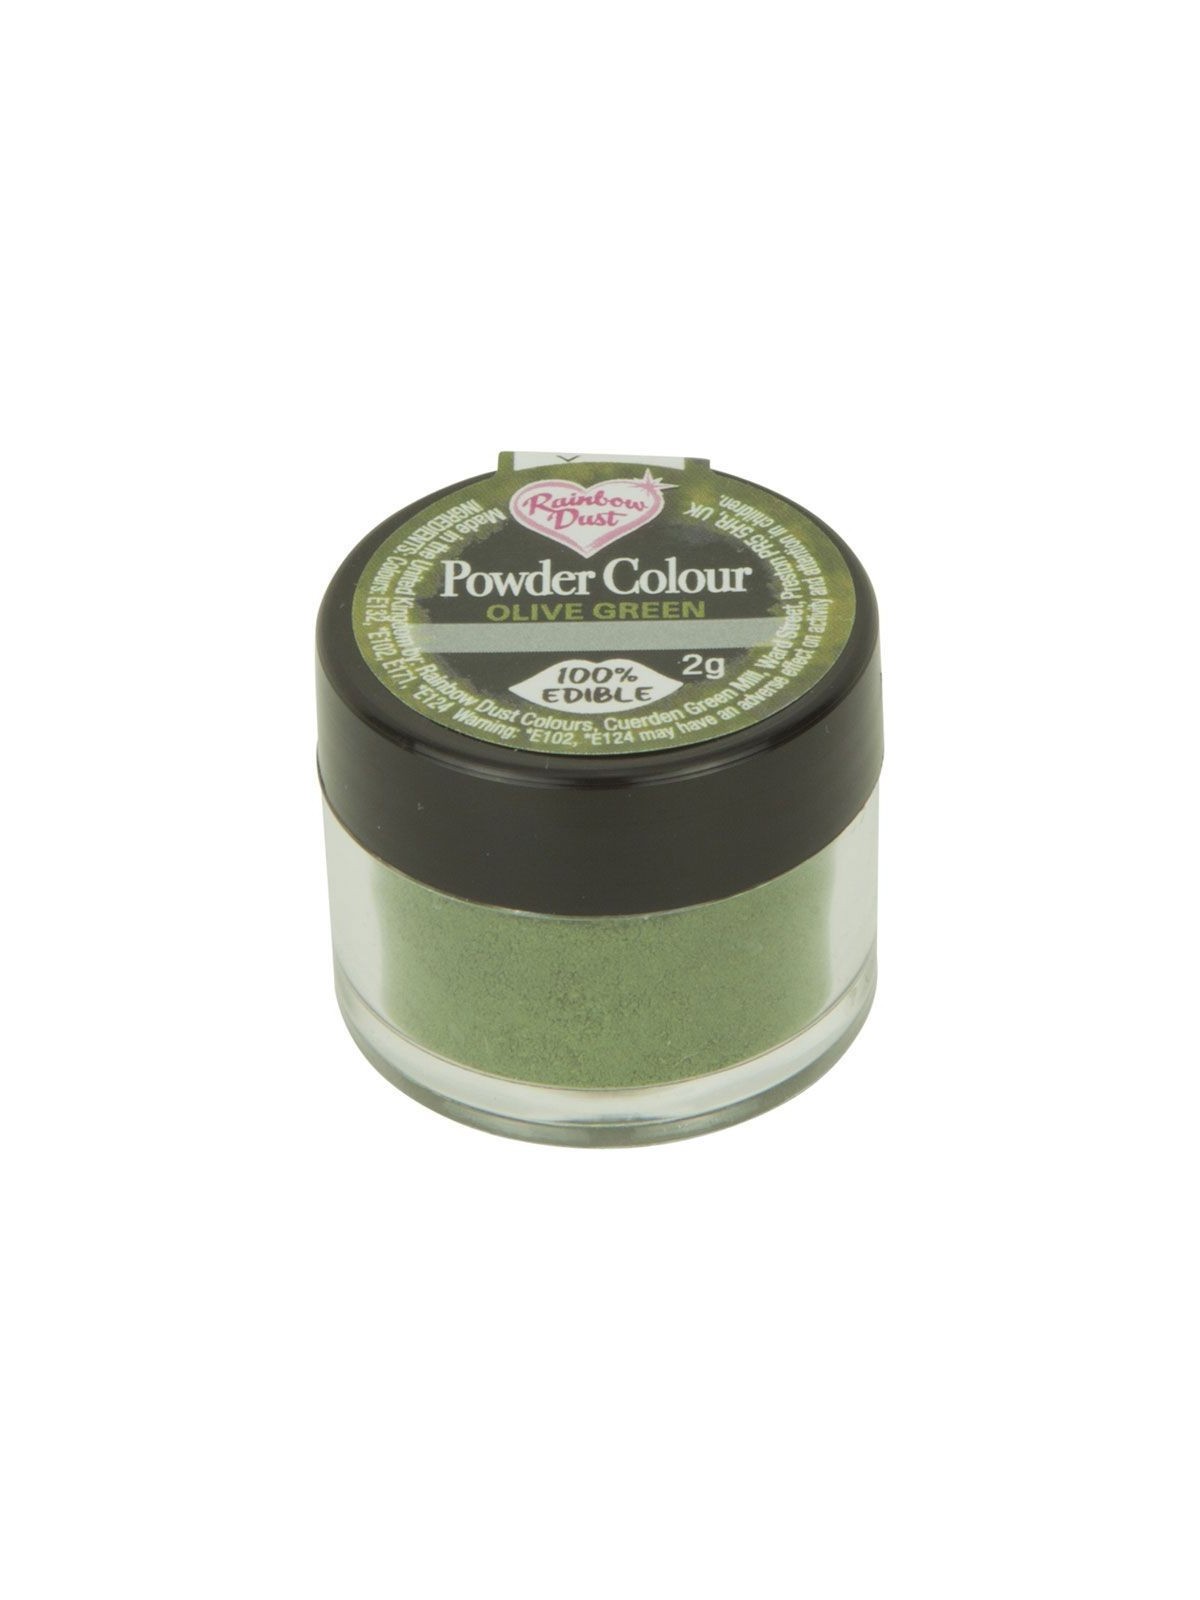 RD Prachová farba olivovo zelená Rainbow dust - Olive green